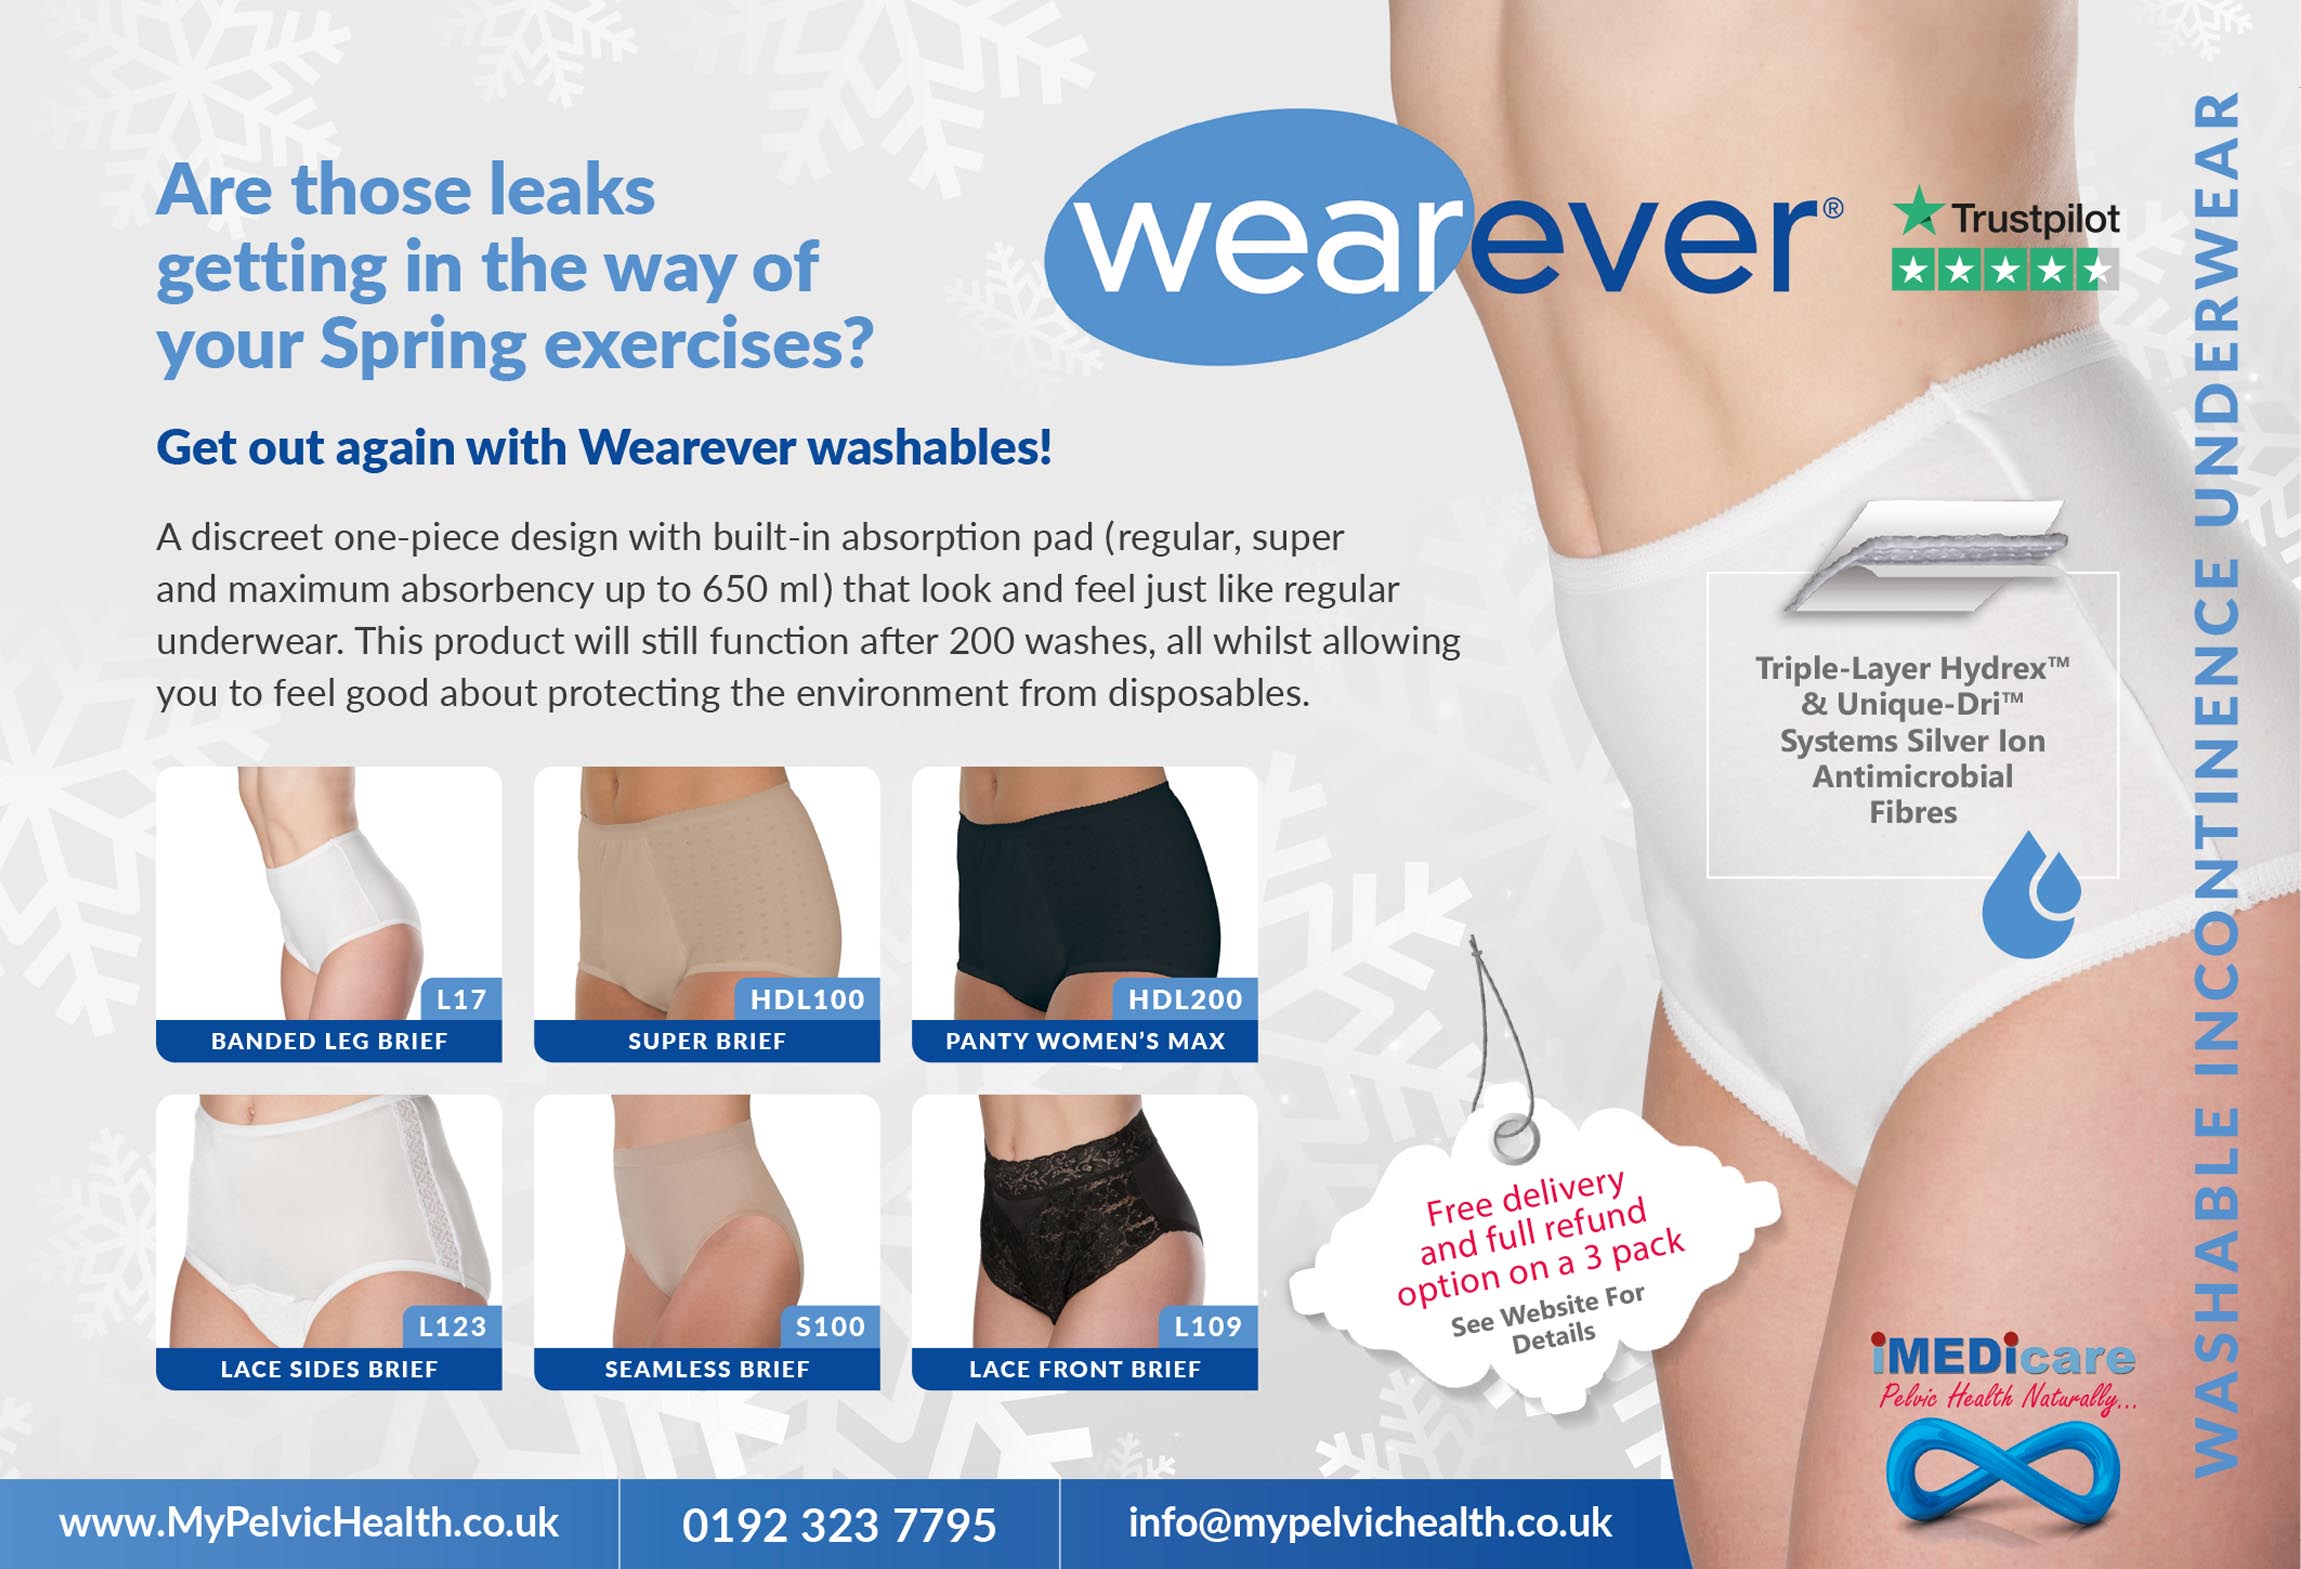 Wearever Incontinence for Women - My Pelvic Health - iMEDicare UK Ltd